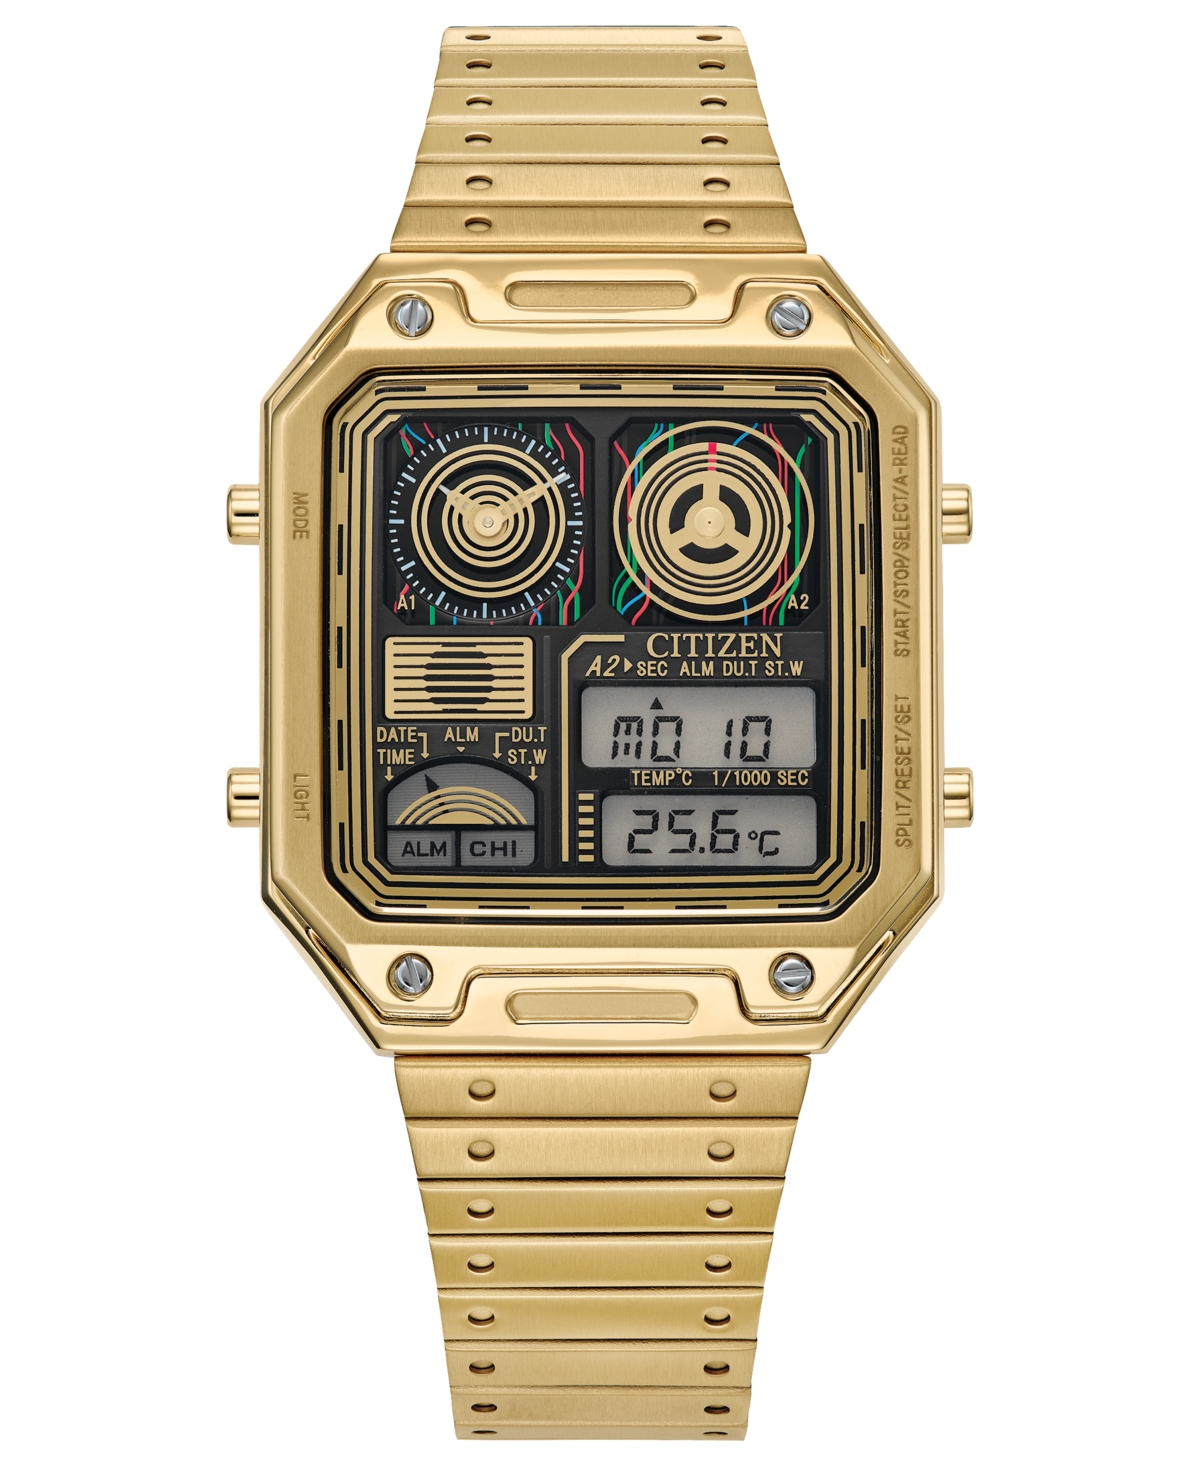 Citizen Men's Star Wars C-3po Ana-digi Gold-tone Stainless Steel Bracelet Watch 33mm